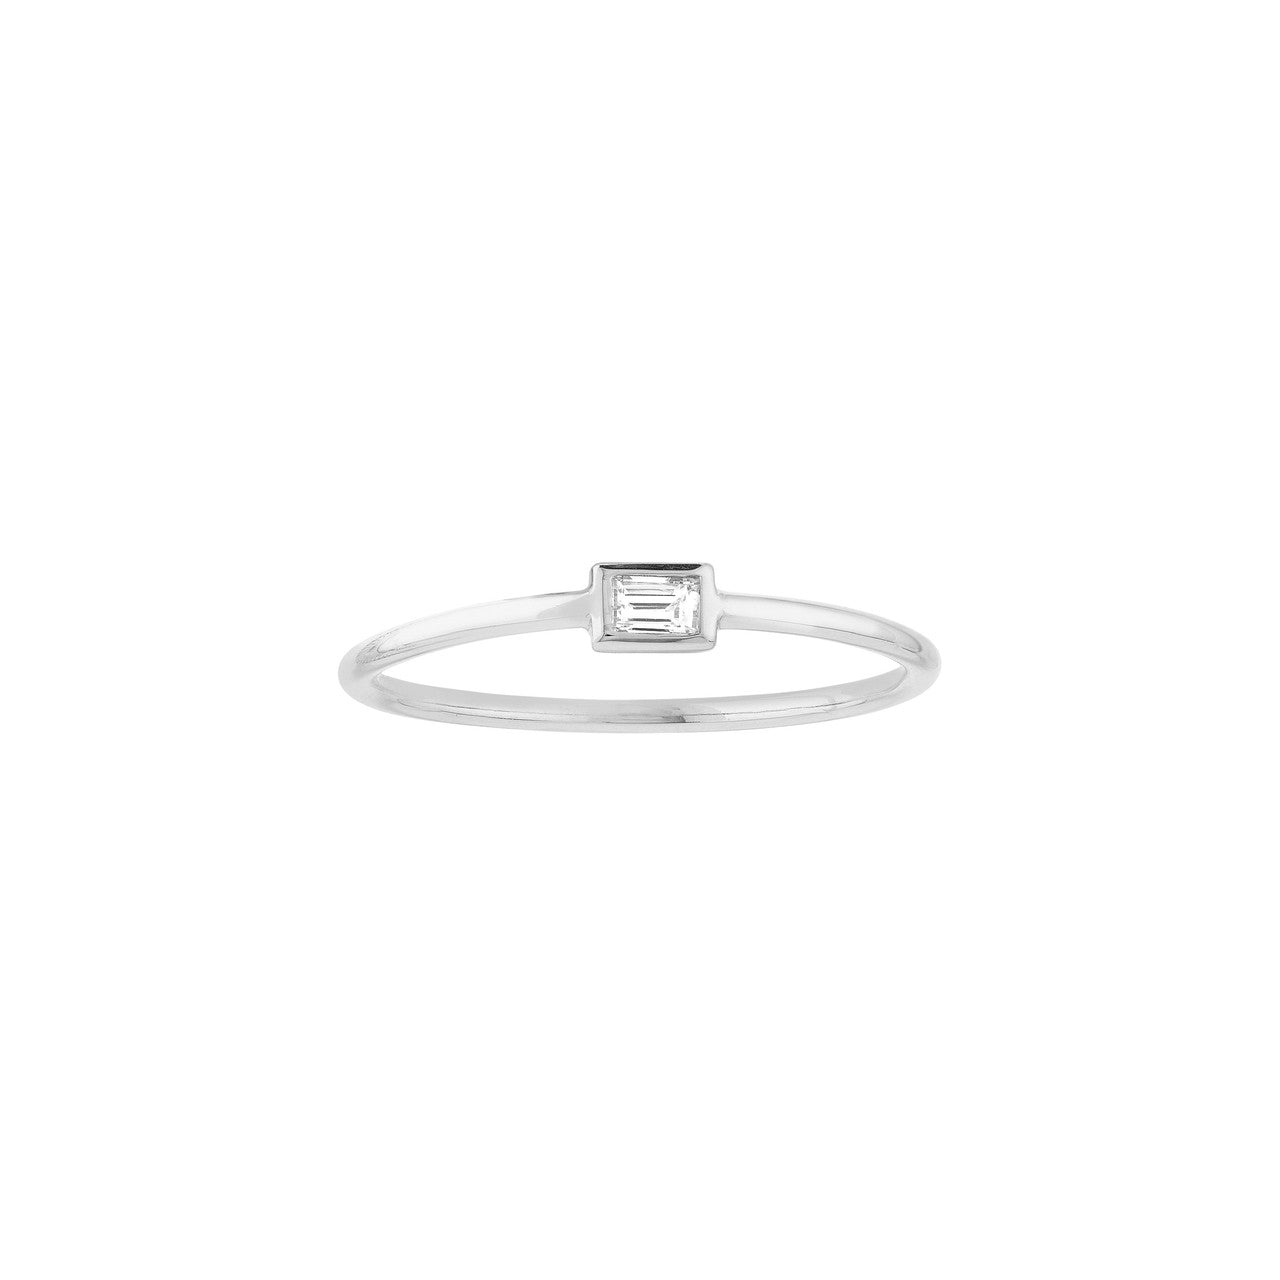 1/10 ctw Baguette Cut Diamond Bezel Set Fashion Ring in 14k White Gold